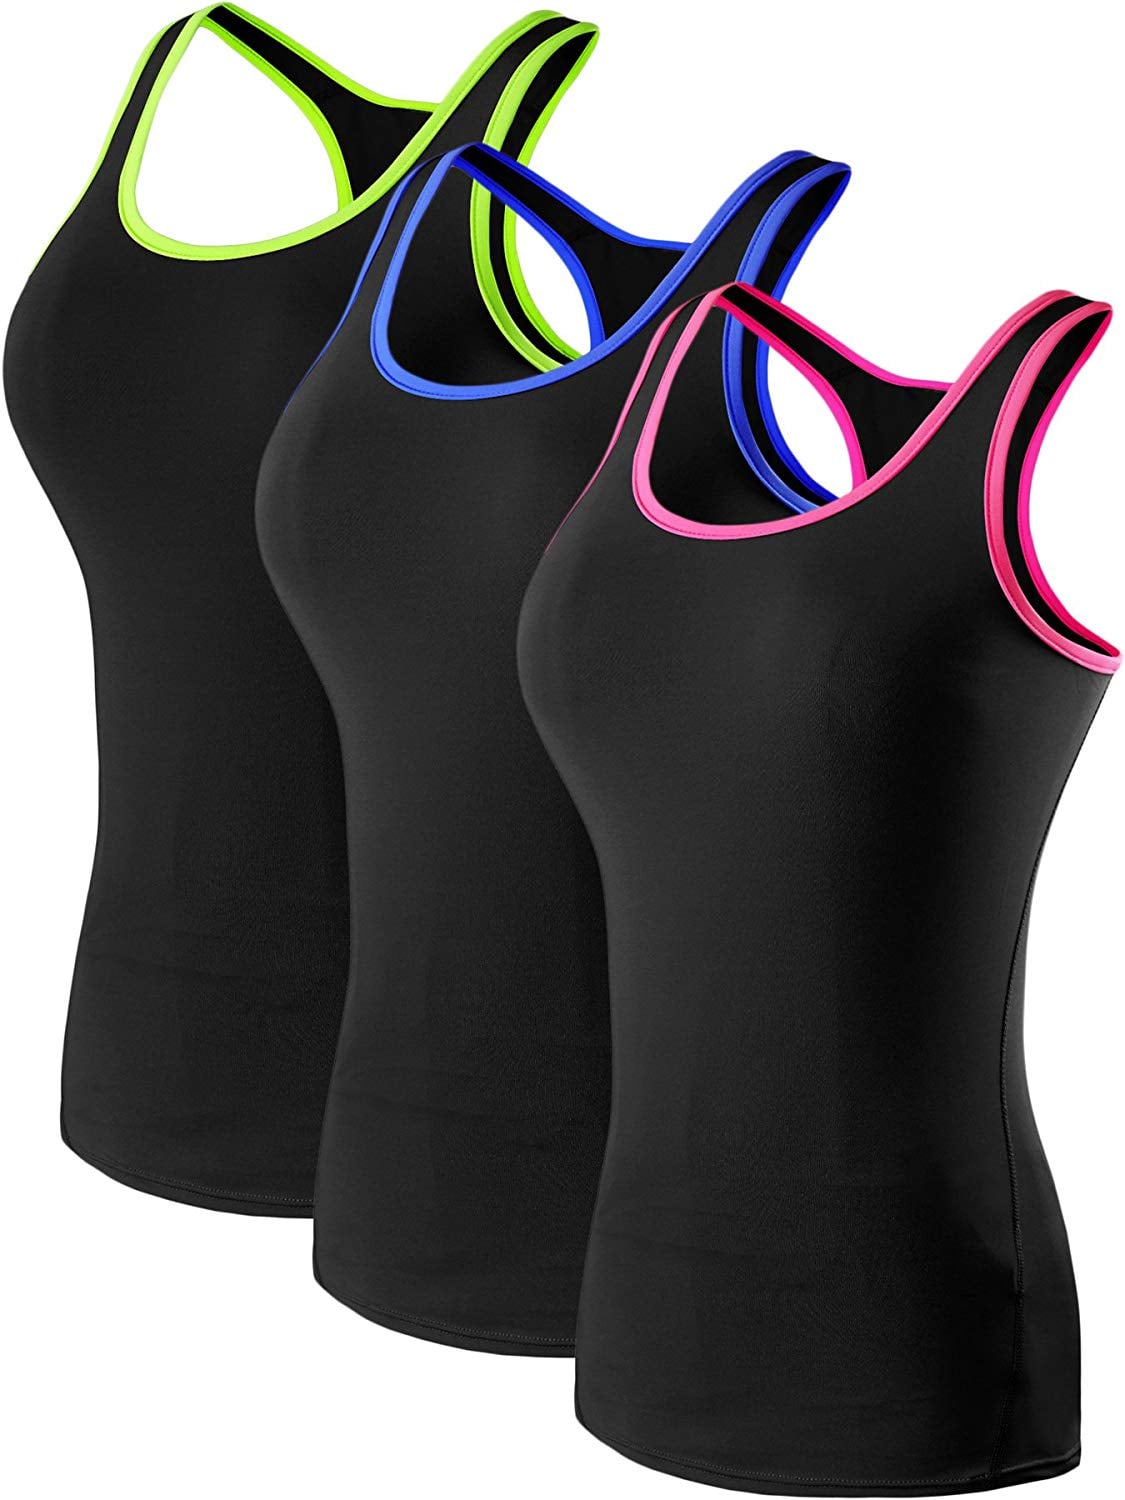 NELEUS Womens 3 Pack Compression Workout Athletic Shirt